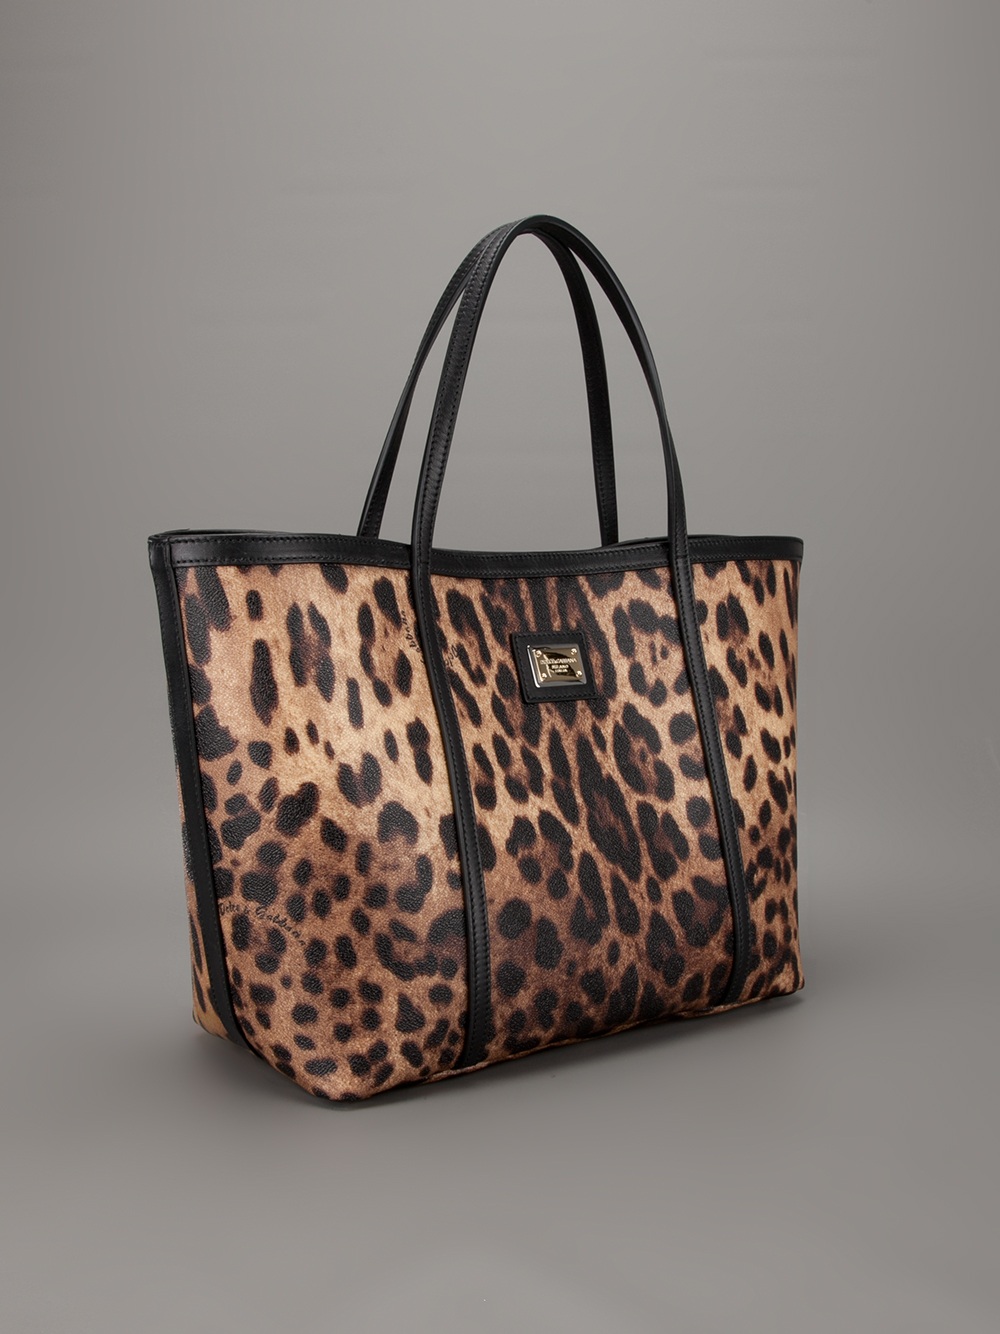 Dolce & Gabbana Leopard Shopping Tote - Lyst